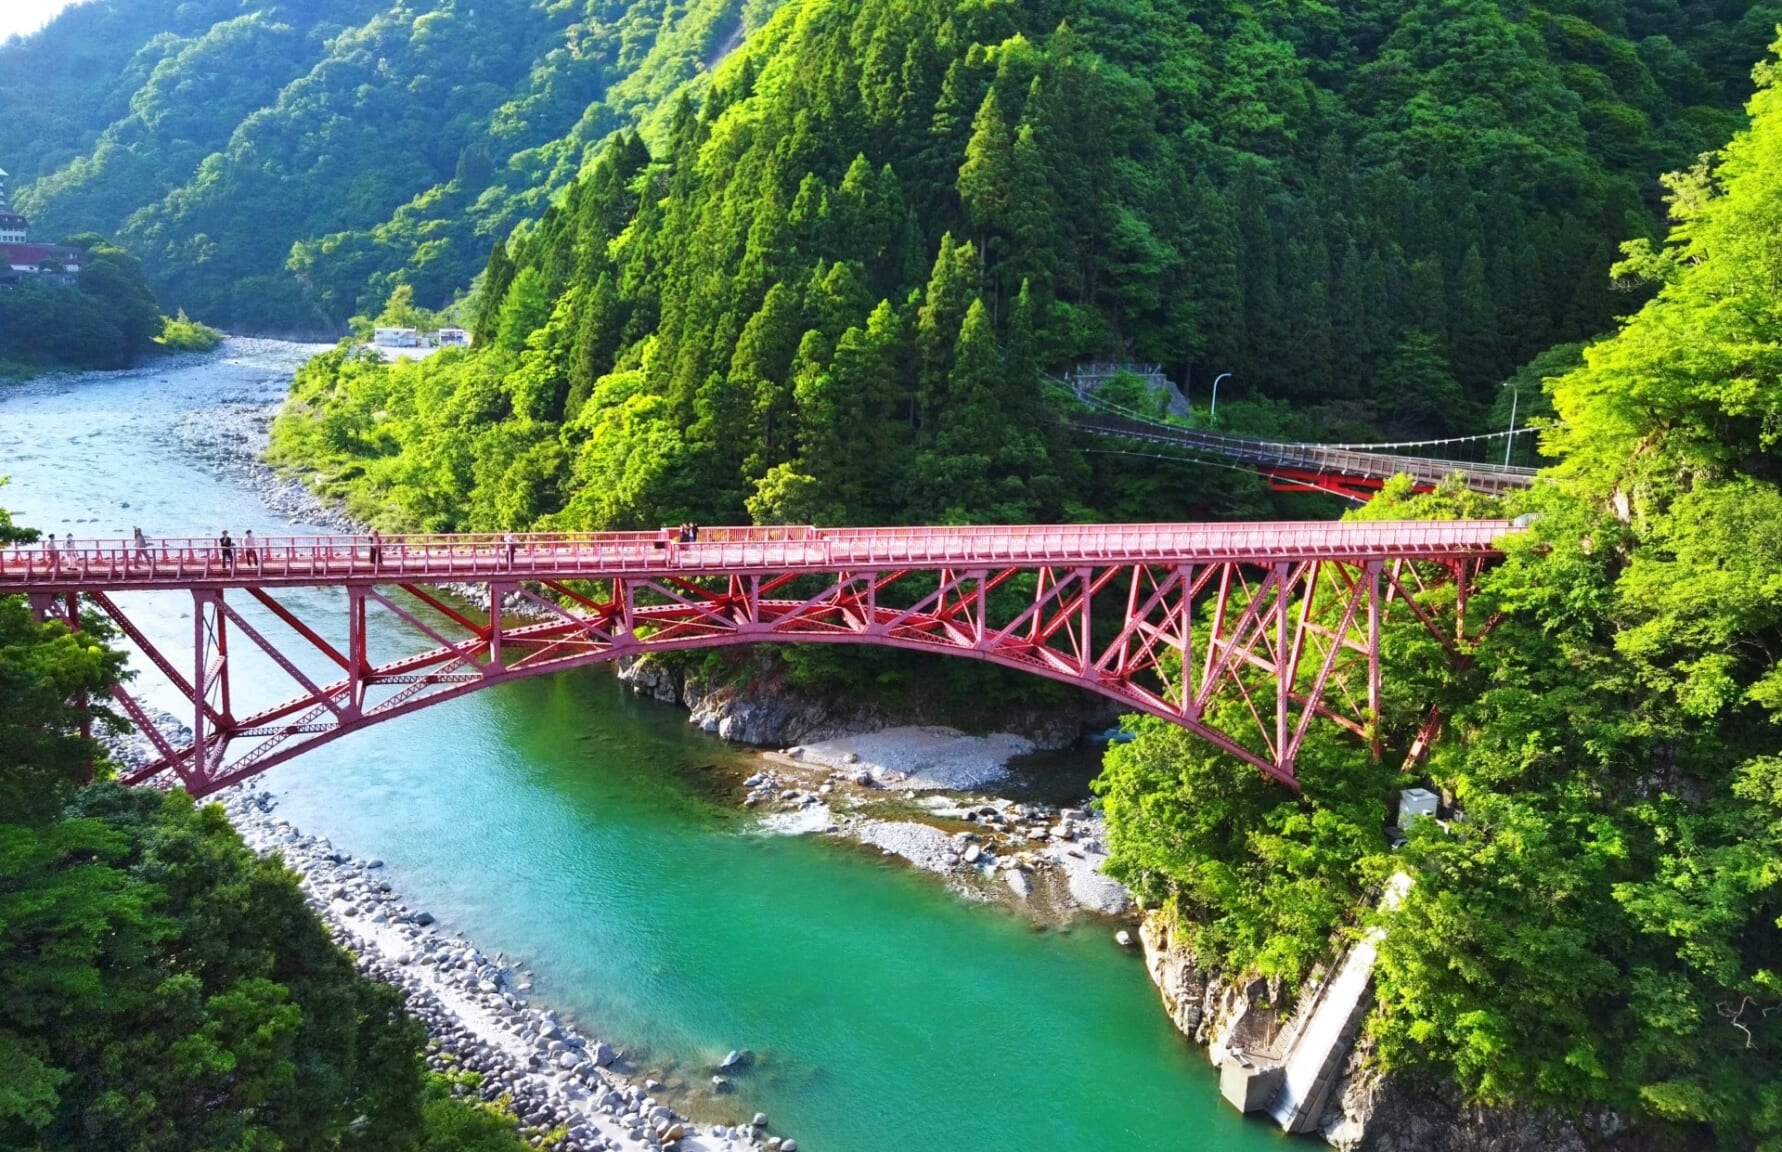 Kurobe Gorge Railway